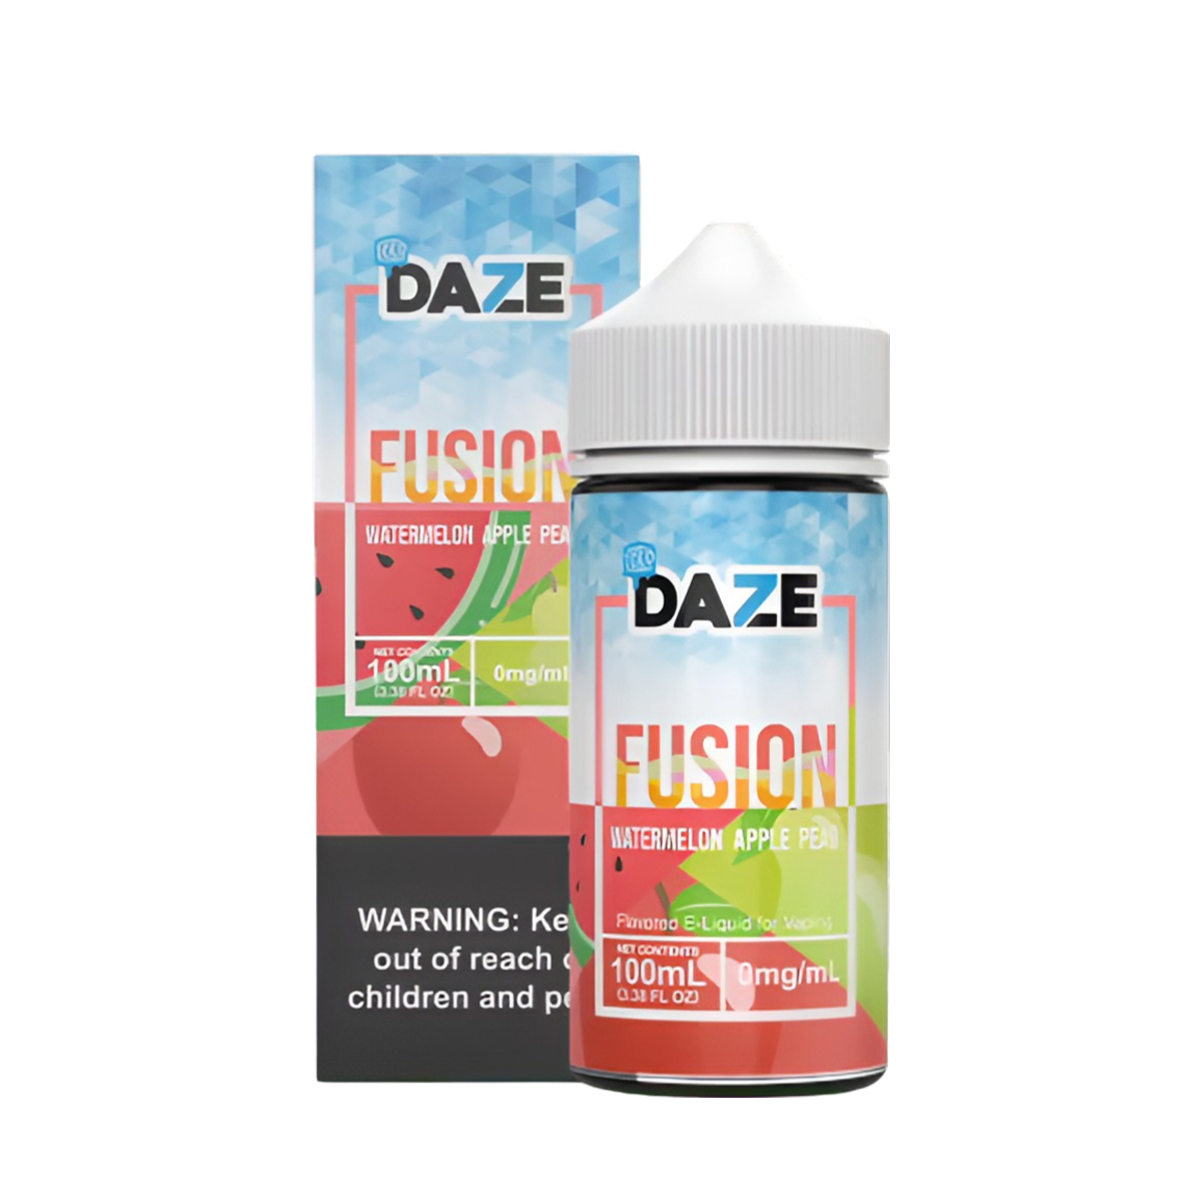 7 Daze Fusion Iced Freebase Vape Juice 0 Mg 100 ML Watermelon Apple Pear Iced